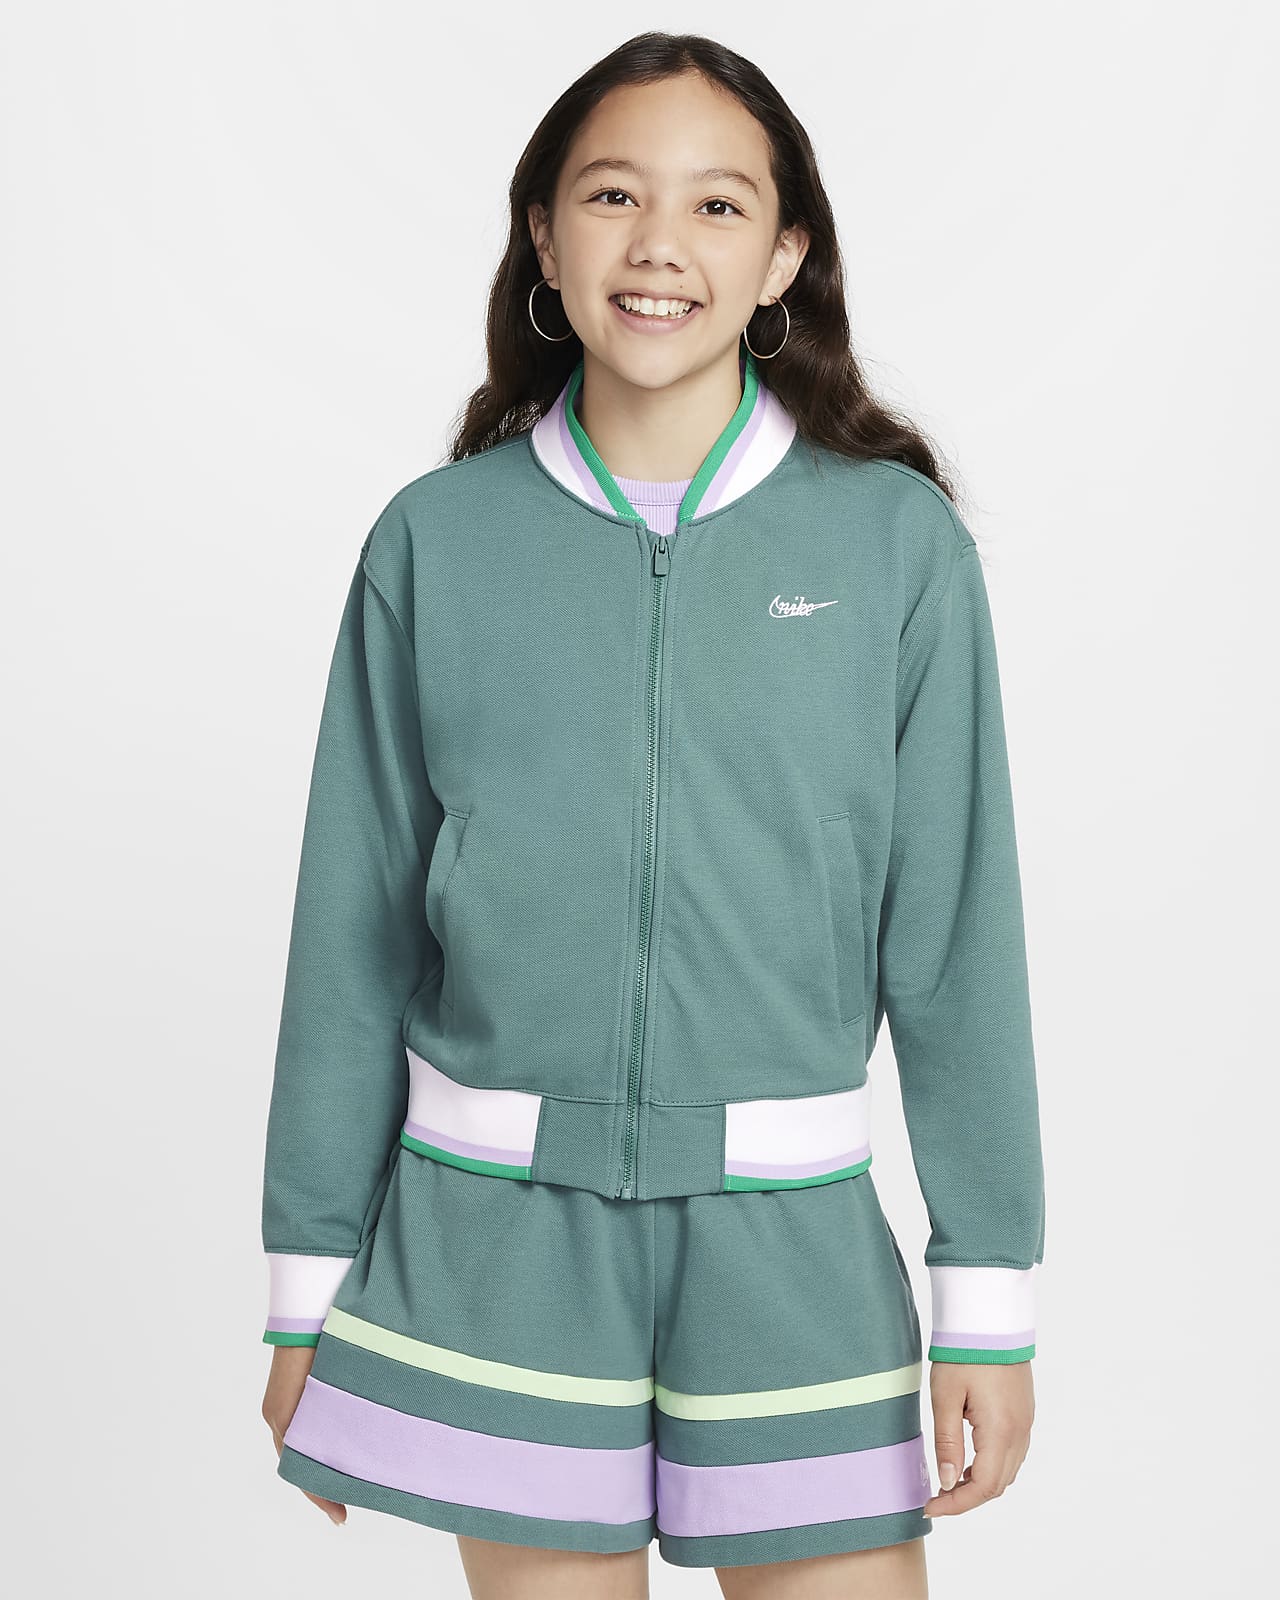 Giacca Nike Sportswear – Bambina/Ragazza